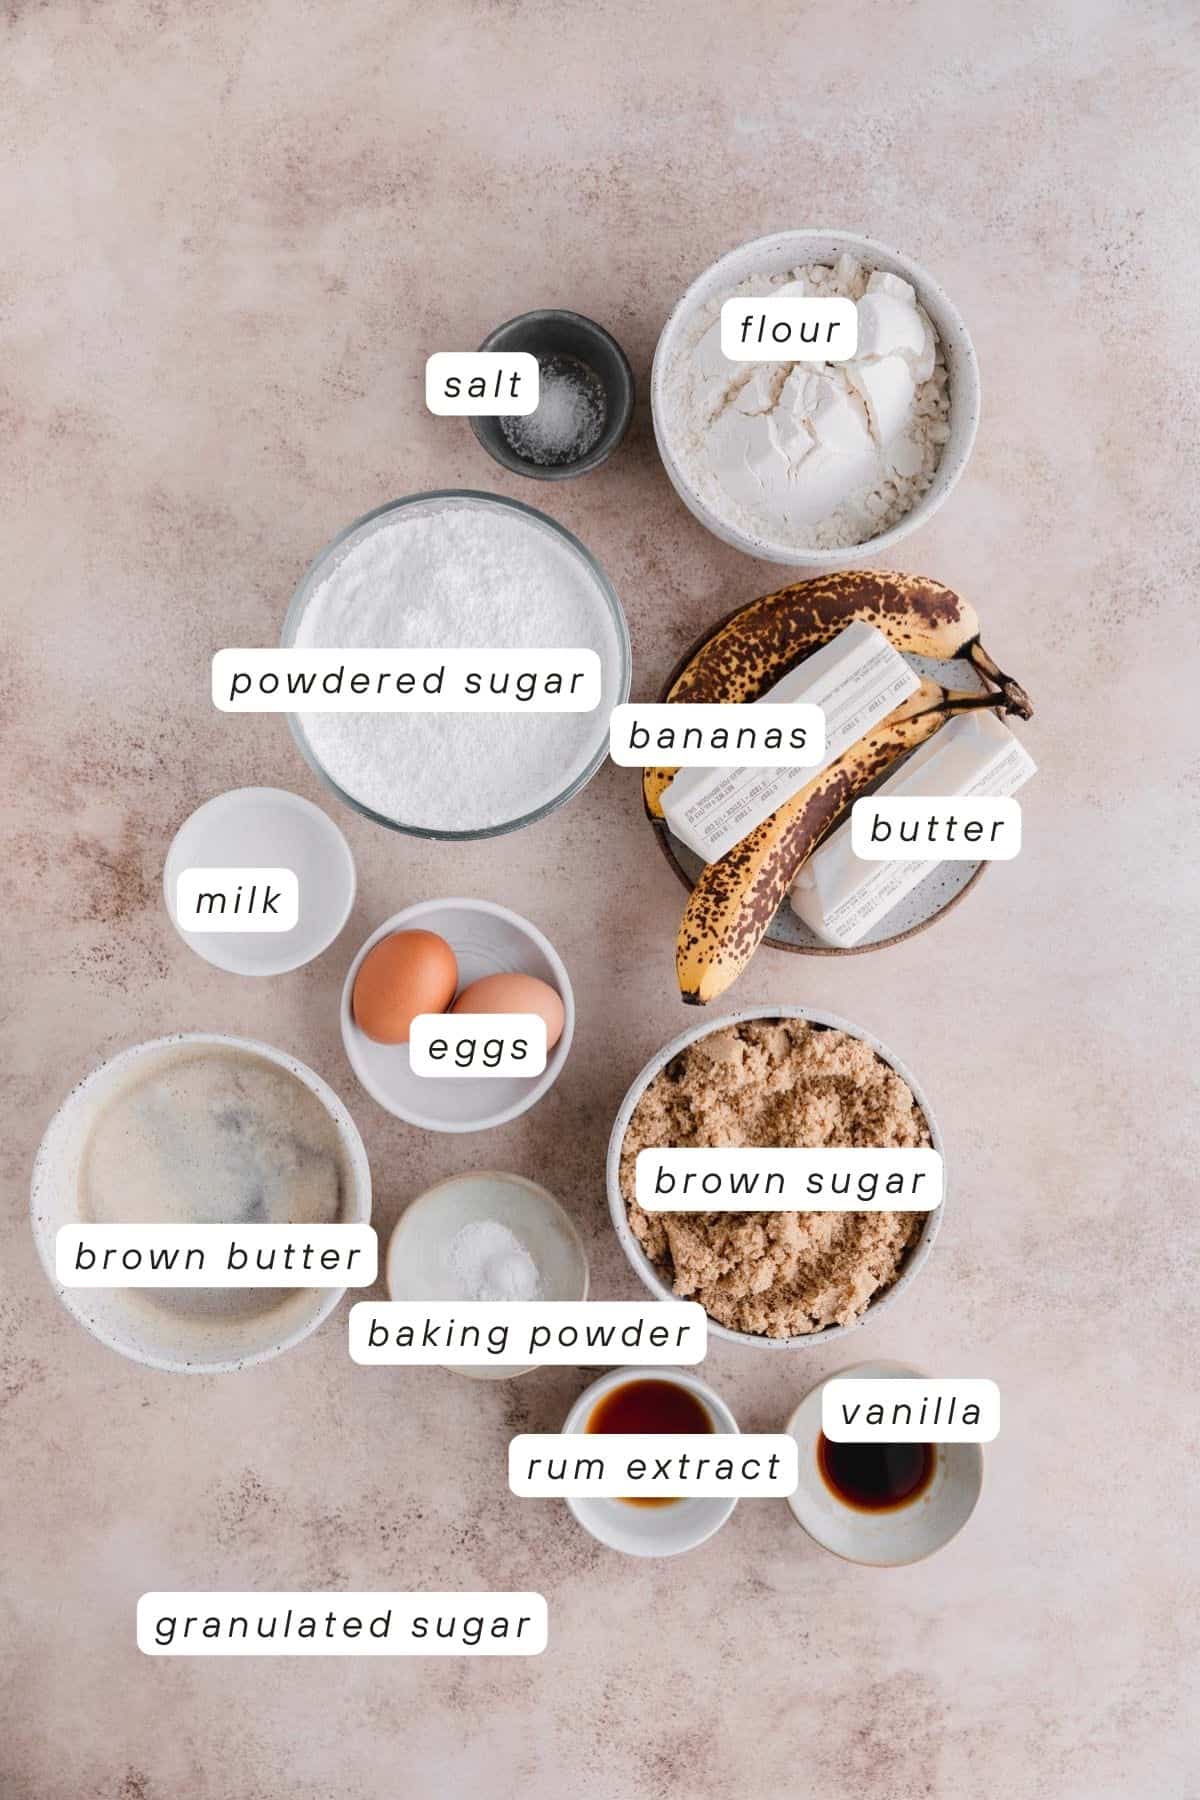 Butter, browned butter, bananas, flour, salt, milk, brown sugar, powdered sugar, baking powder, vanilla, rum extract, eggs.